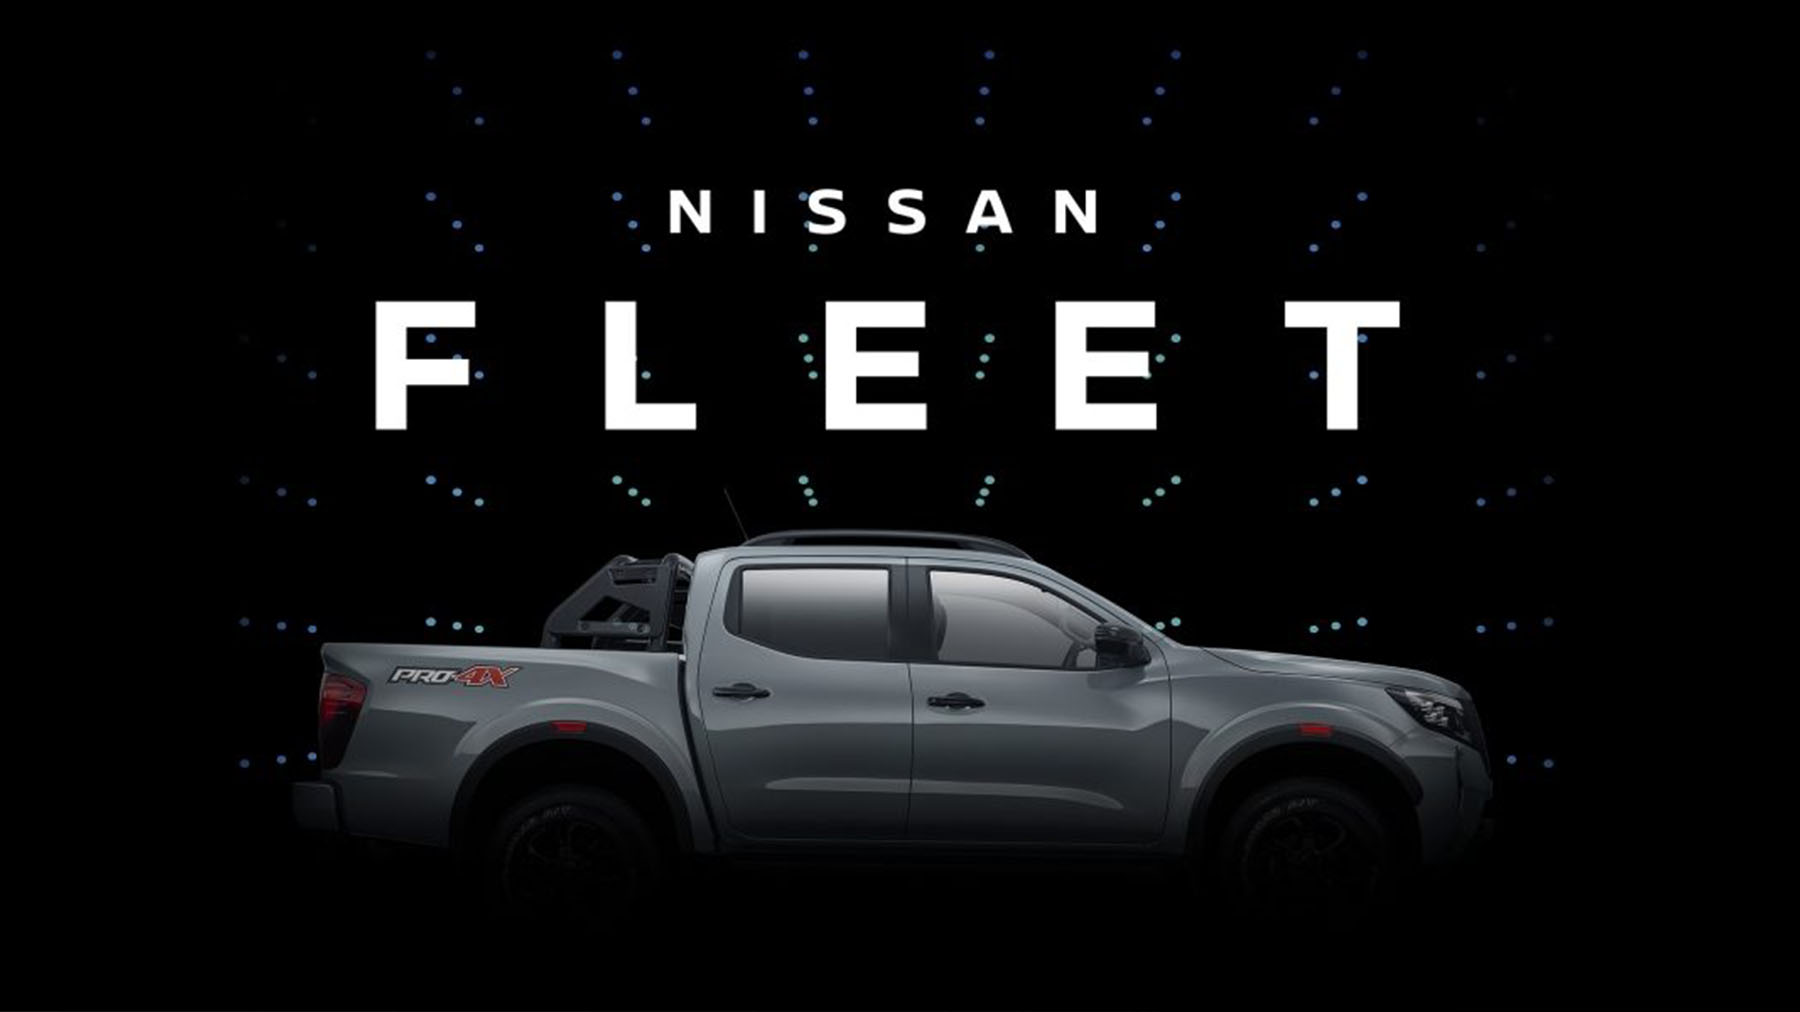 Nissan Fleet